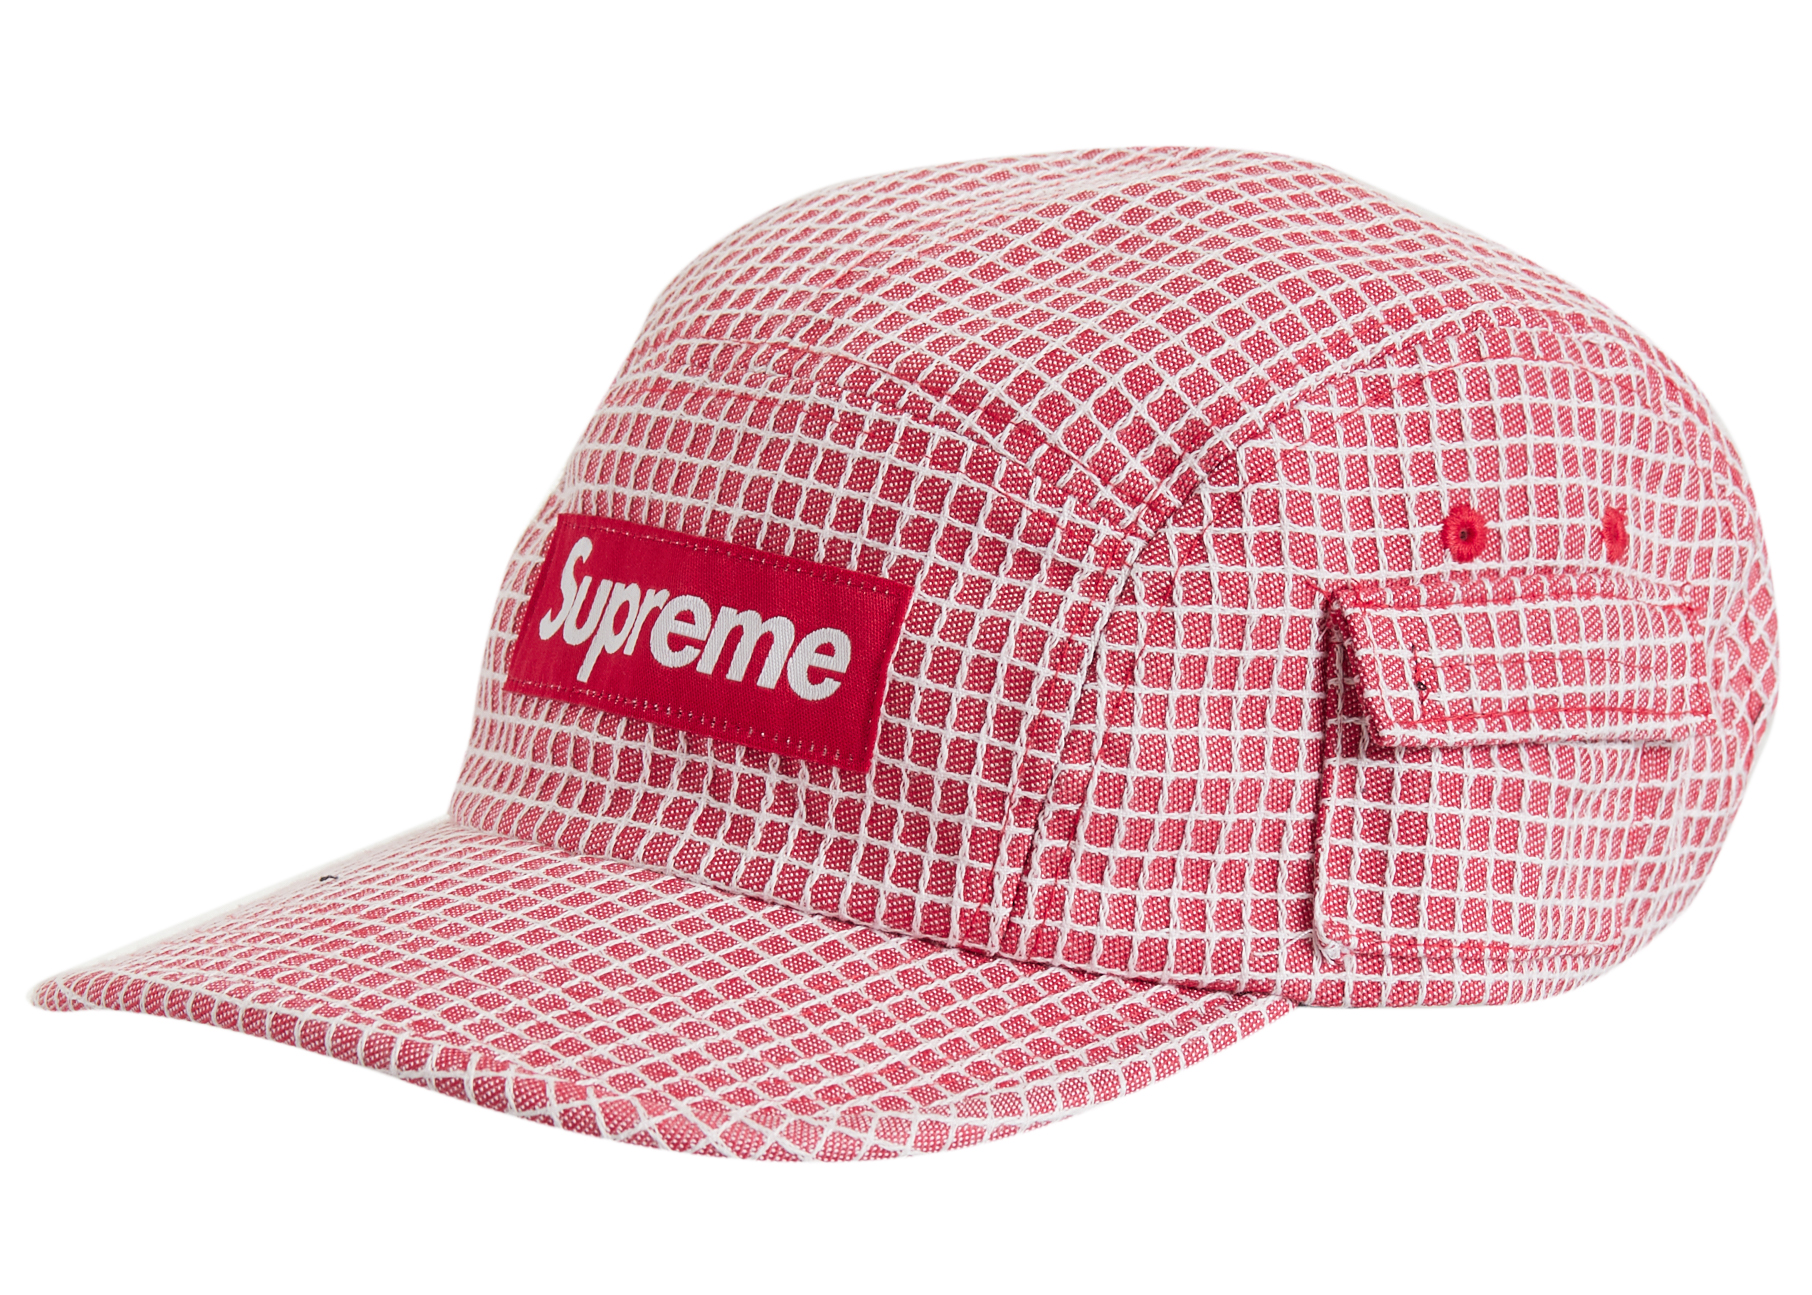 Supreme Denim Camp Cap Red帽子